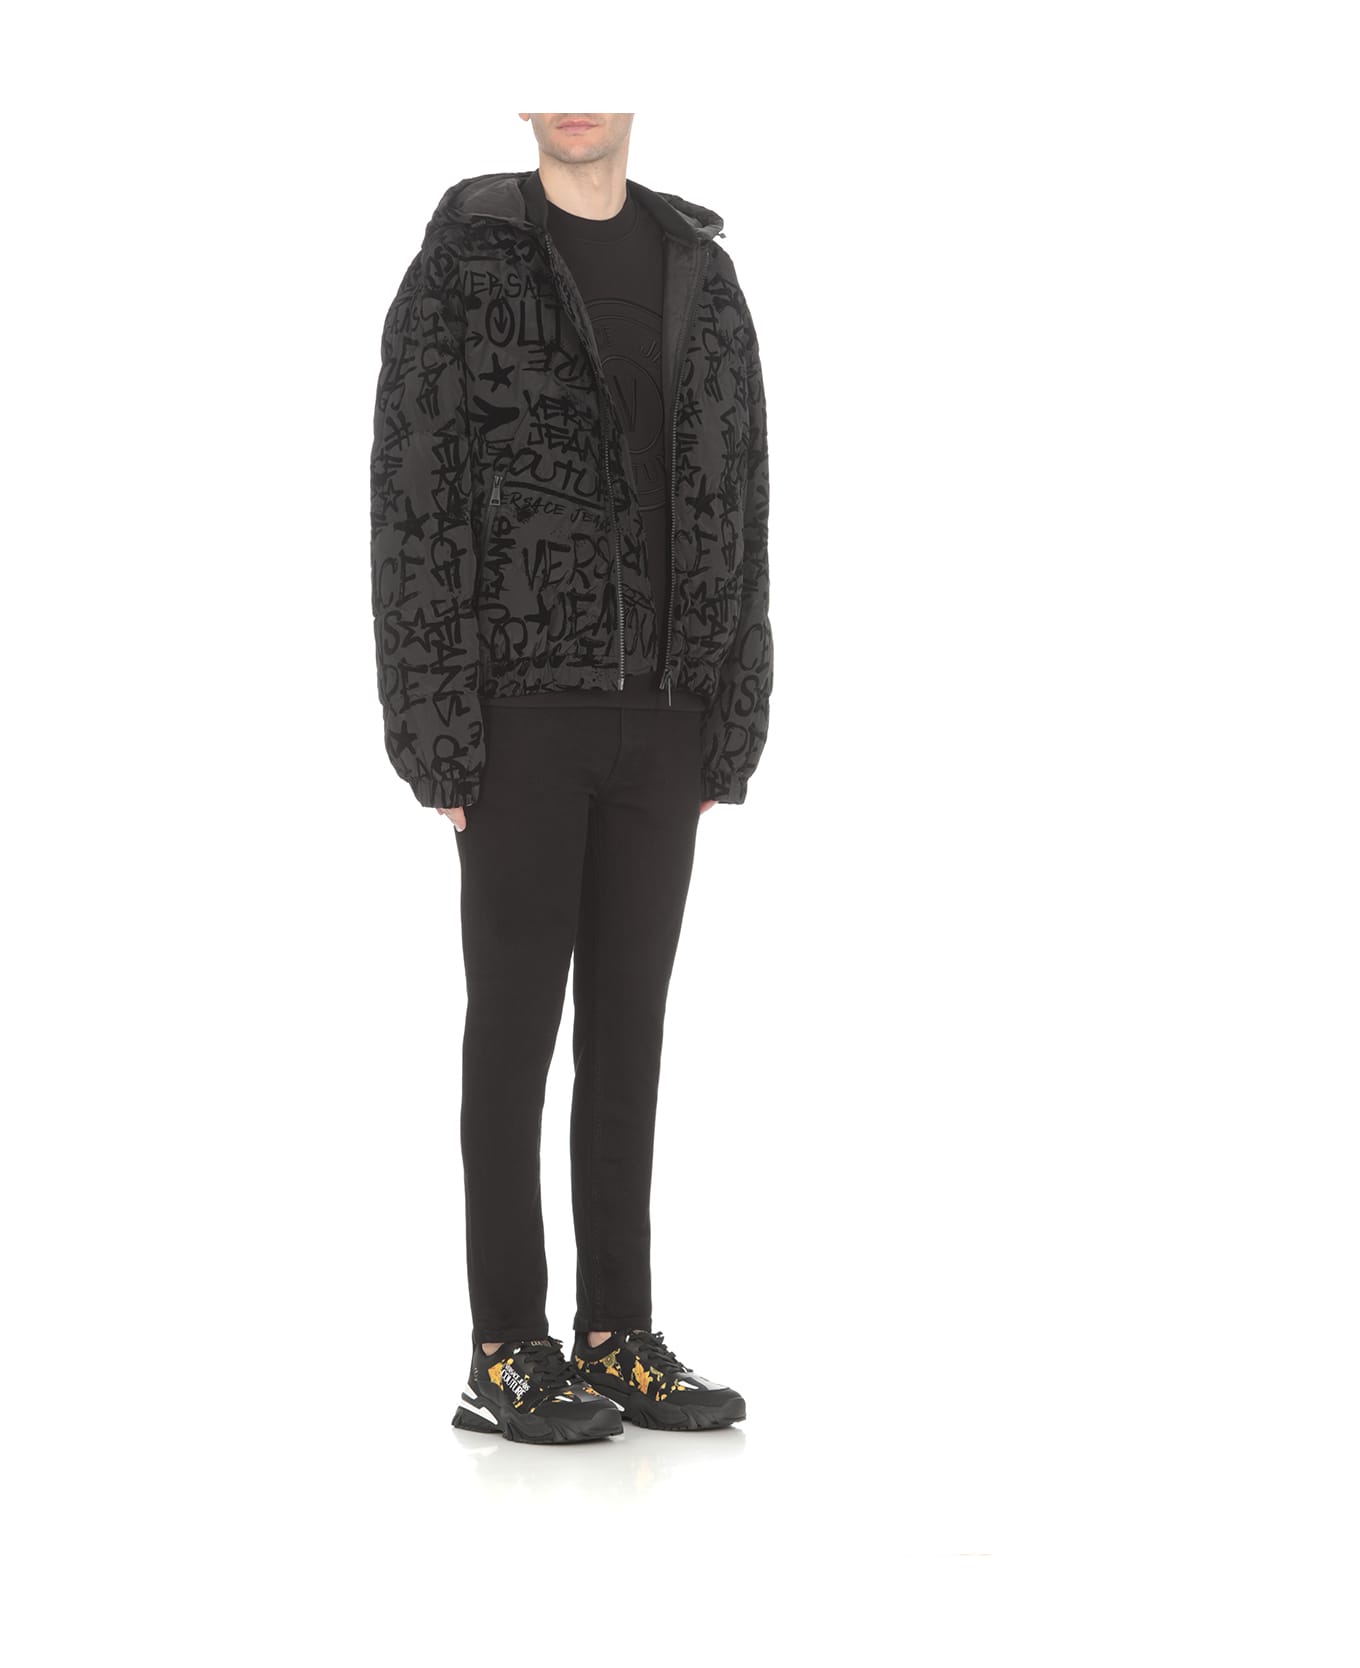 Versace Jeans Couture Sweatshirt - Black